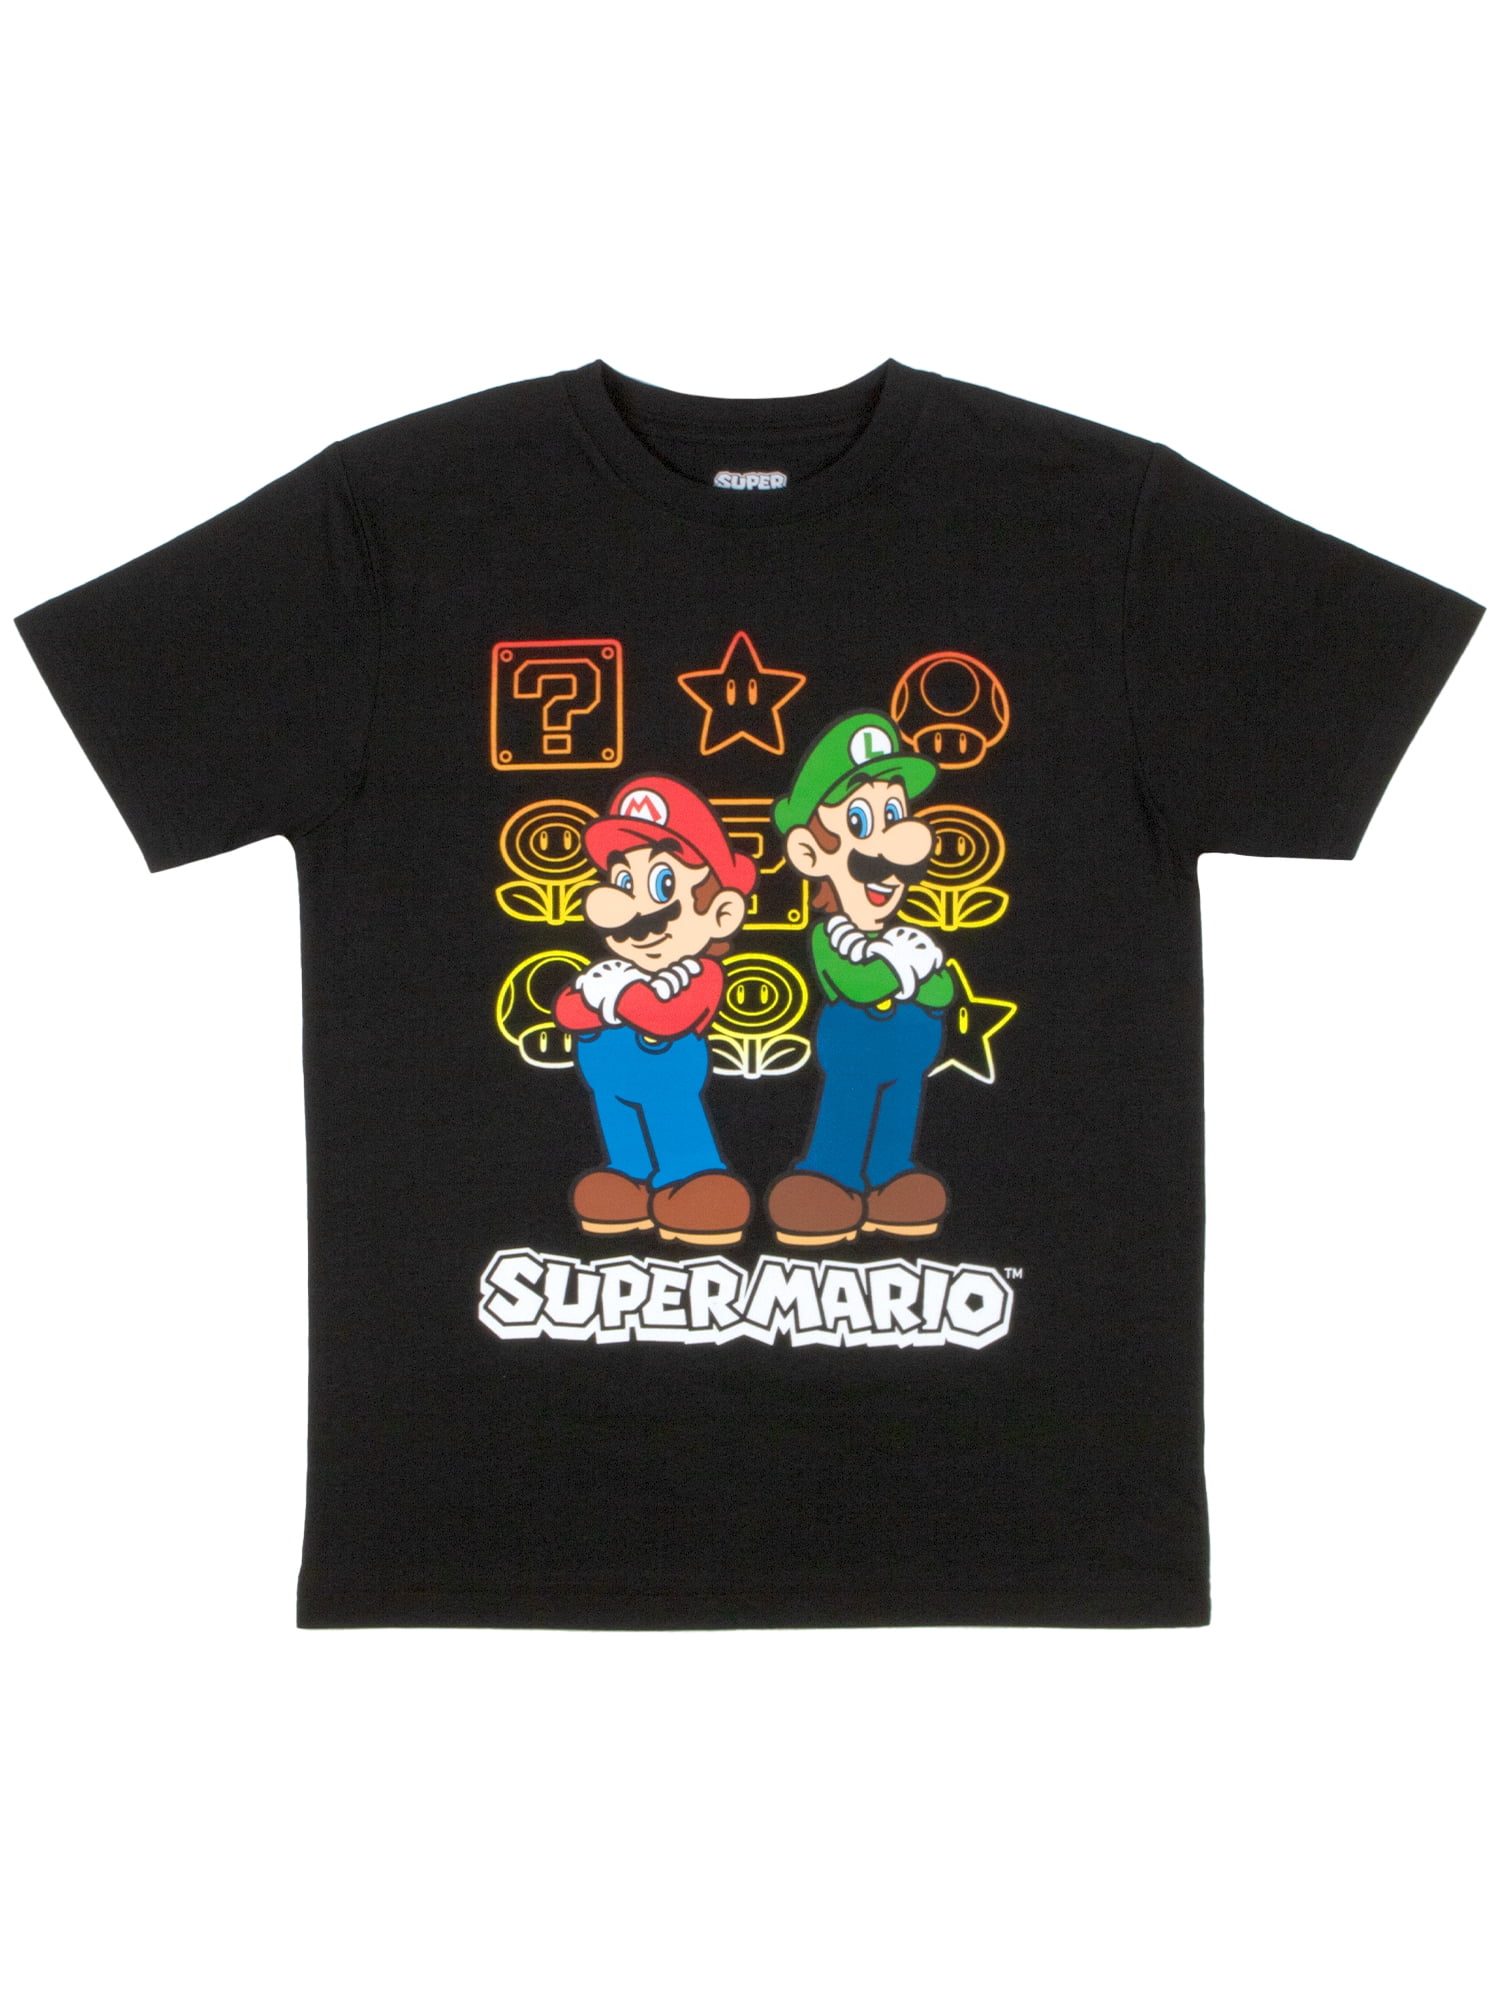 Nintendo Super Mario Boys T Shirts 3 Pack, Super Mario Bros